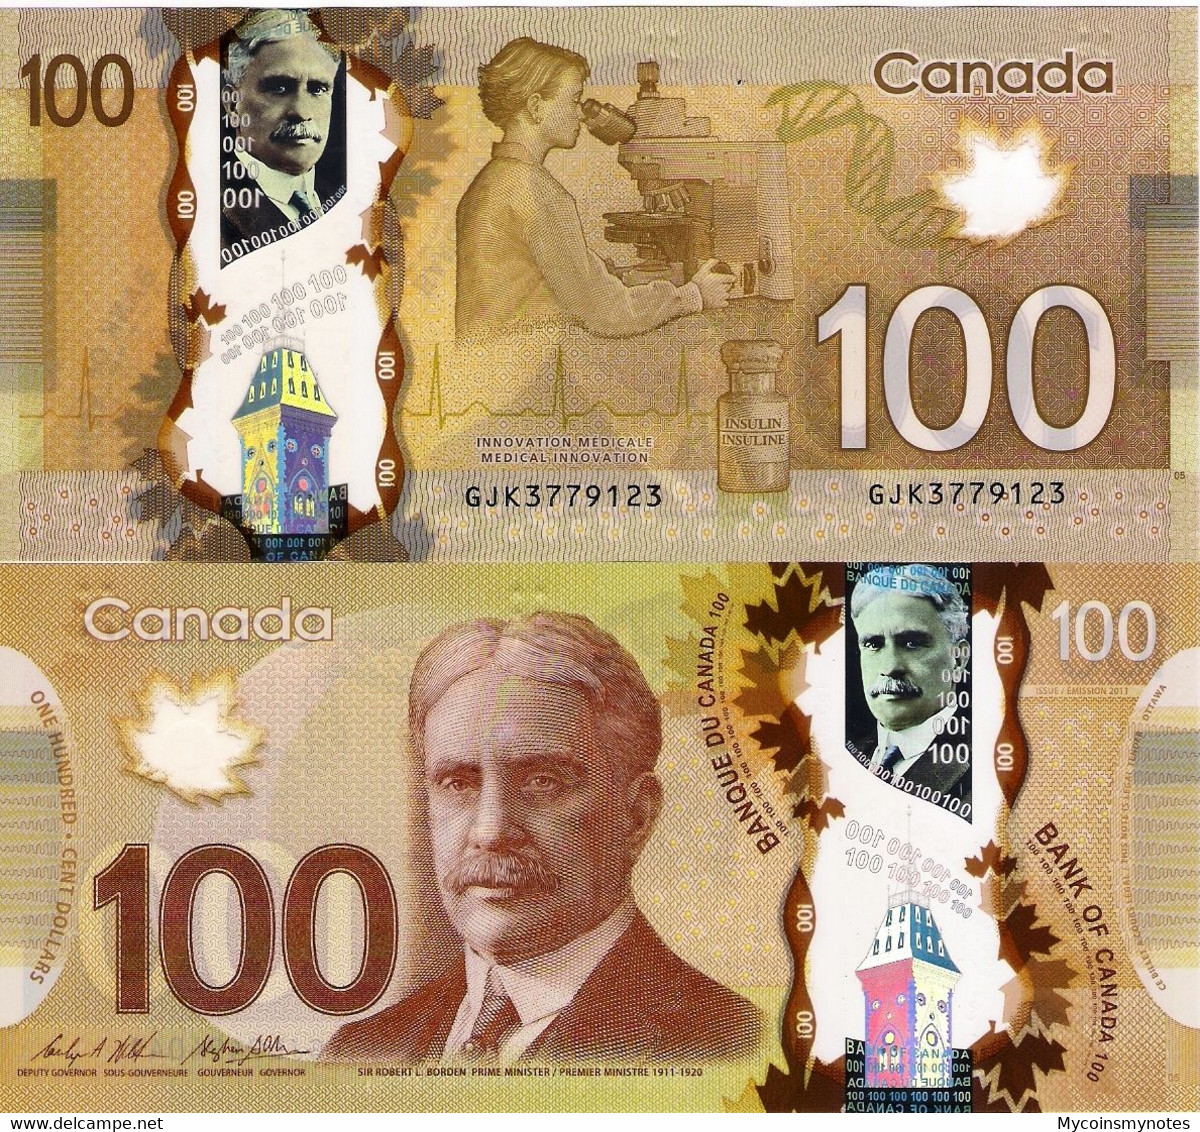 CANADA 100 DOLLAR 2011 "2016" P110c, Sir Robert Borden, Polymer, UNC - Canada